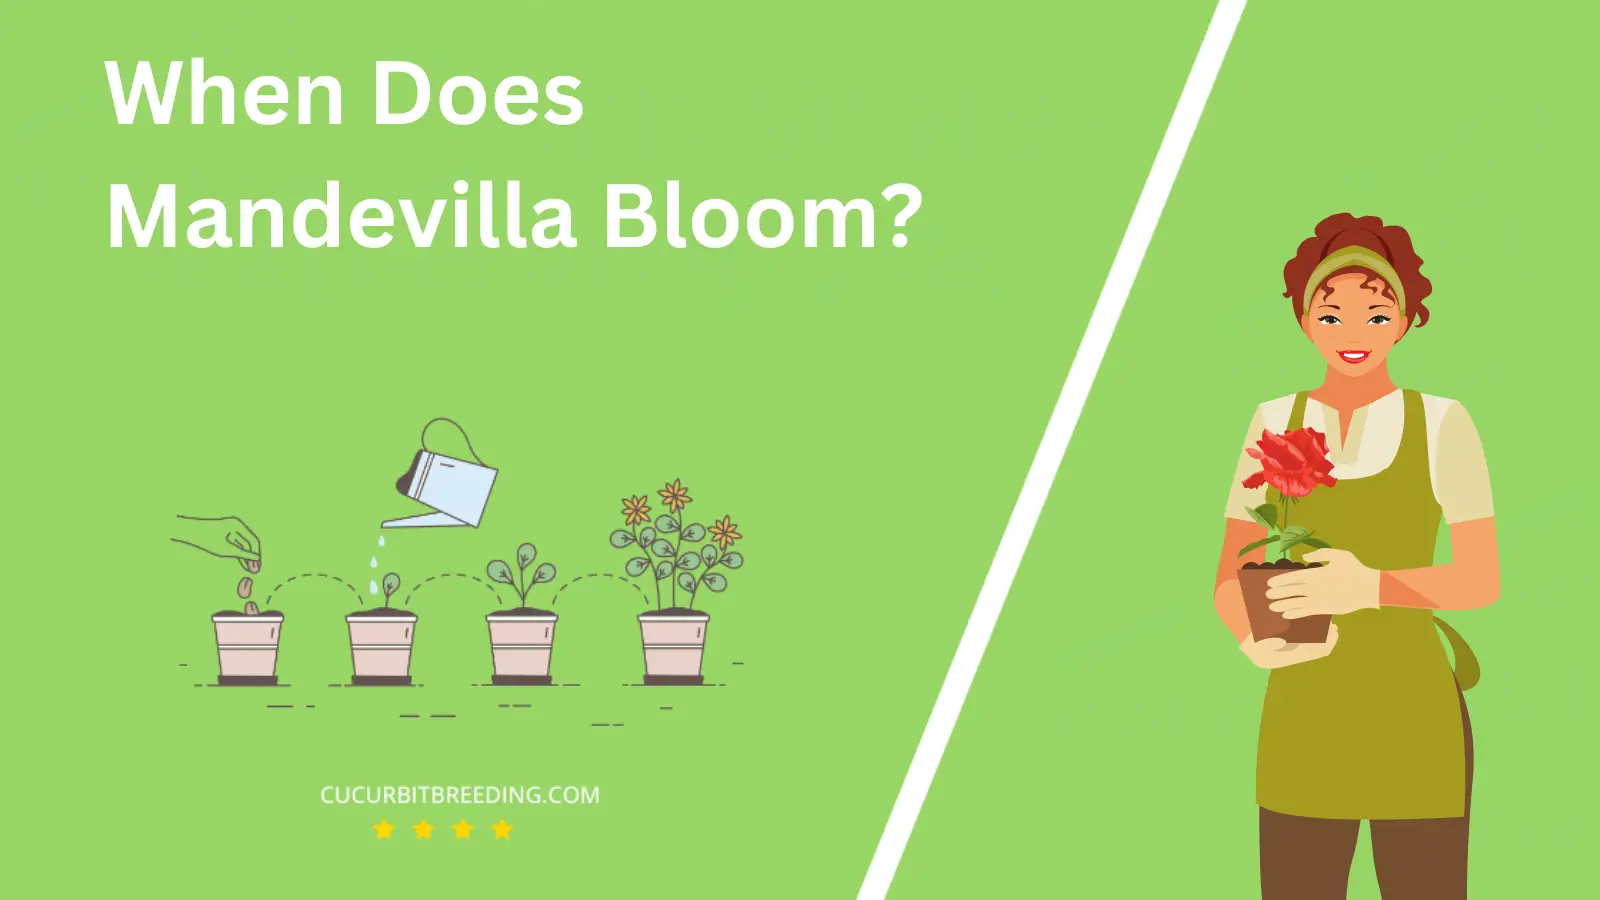 When Does Mandevilla Bloom?